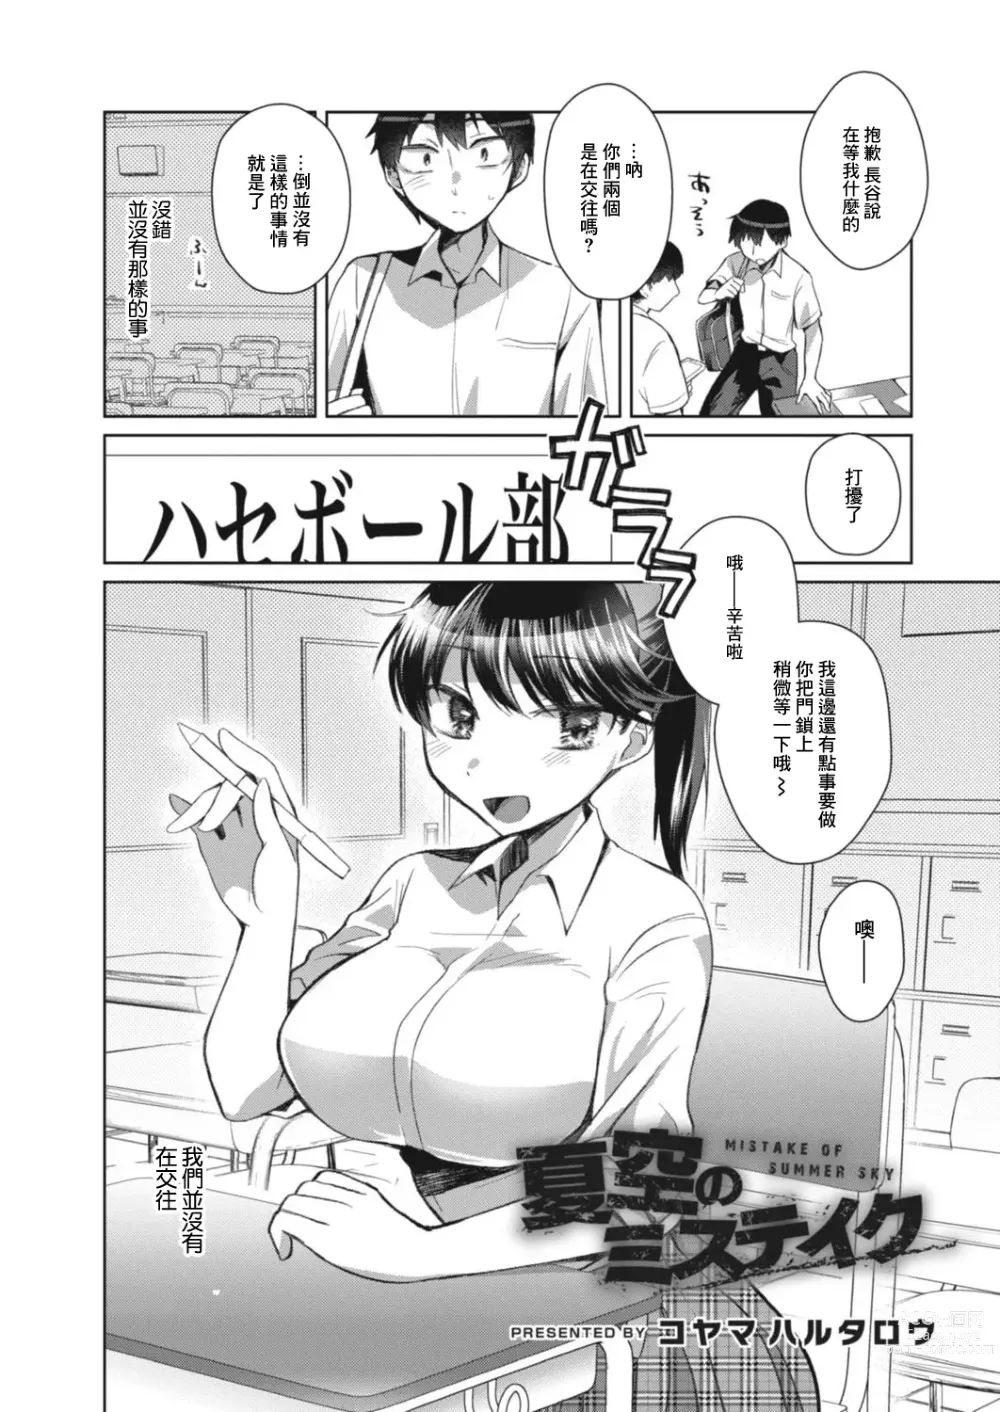 Page 2 of doujinshi Natsuzora no Mistake - MISTAKE OF SUMMER SKY